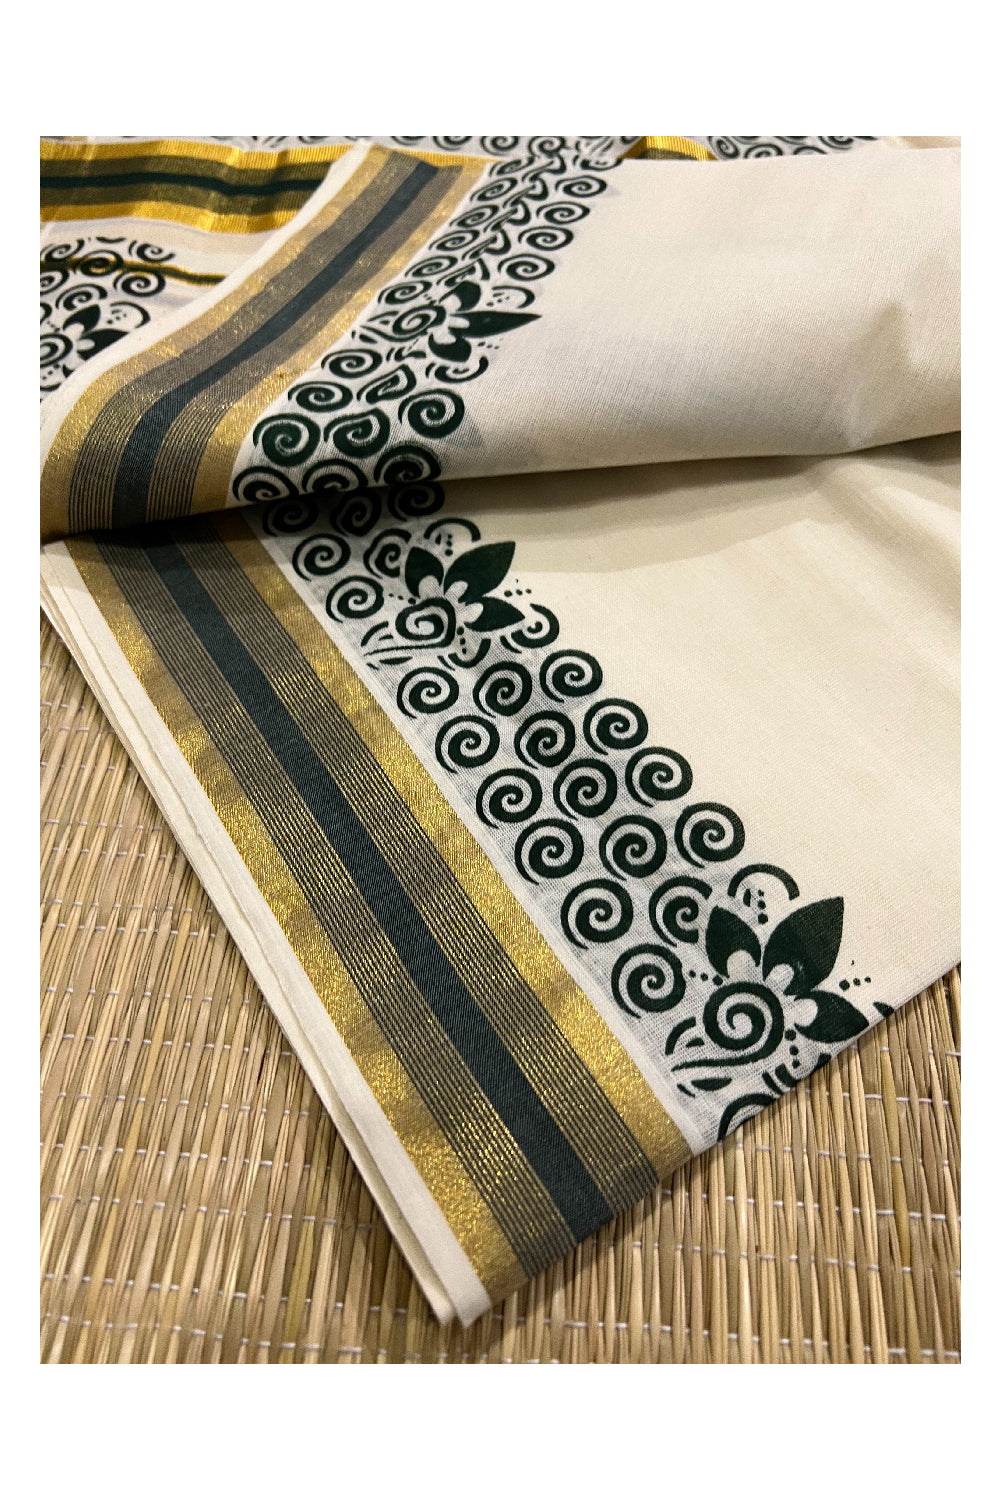 Kerala Cotton Kasavu Set Mundu (Mundum Neriyathum) with Dark Green Floral Block Prints on Border 2.80 Mtrs